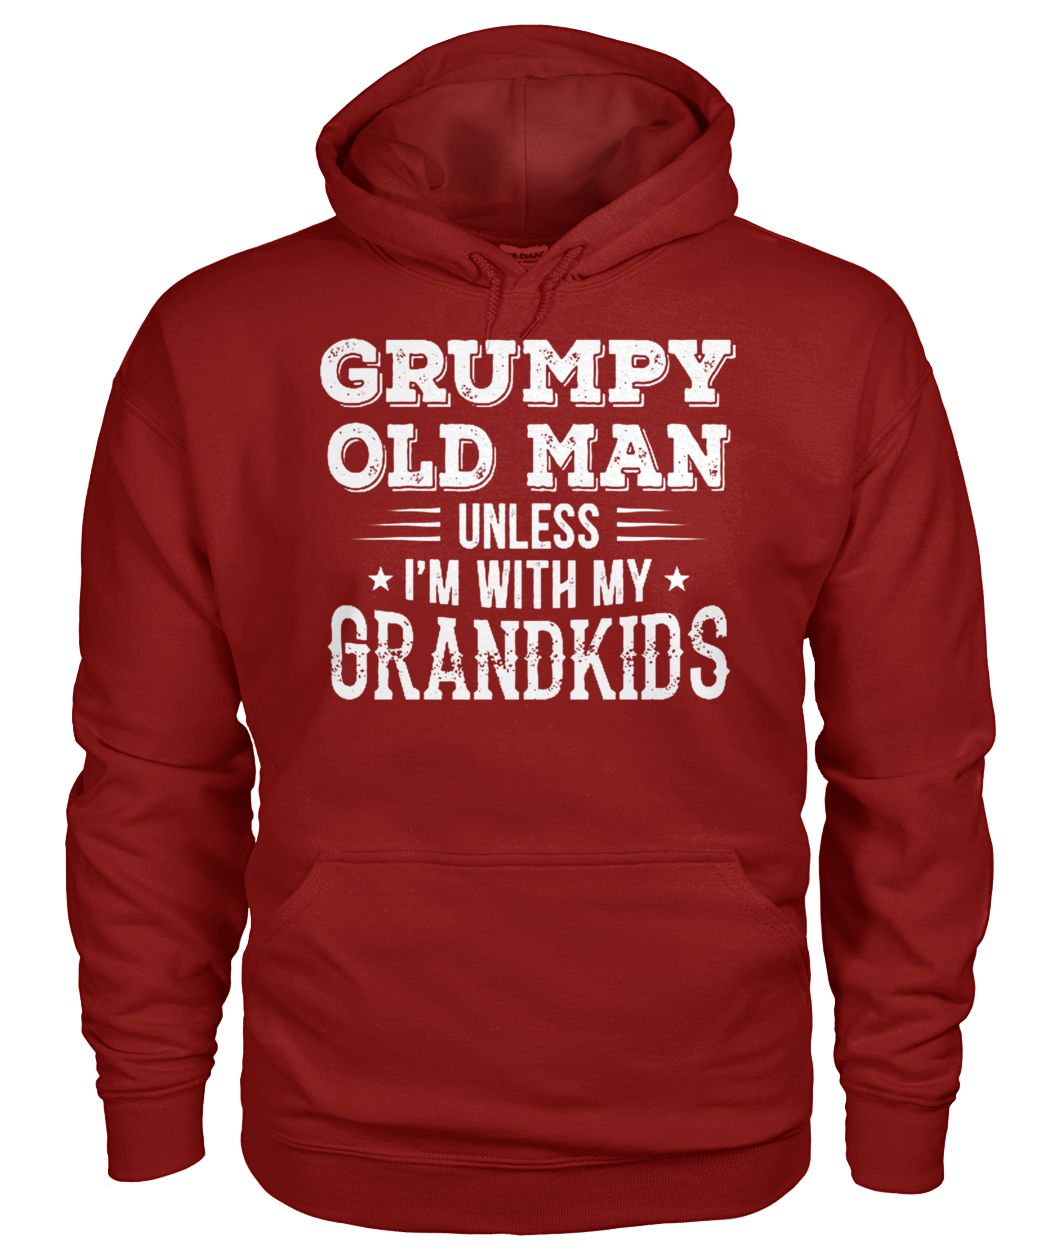 Grumpy old man unless I'm with my grandkids gildan hoodie